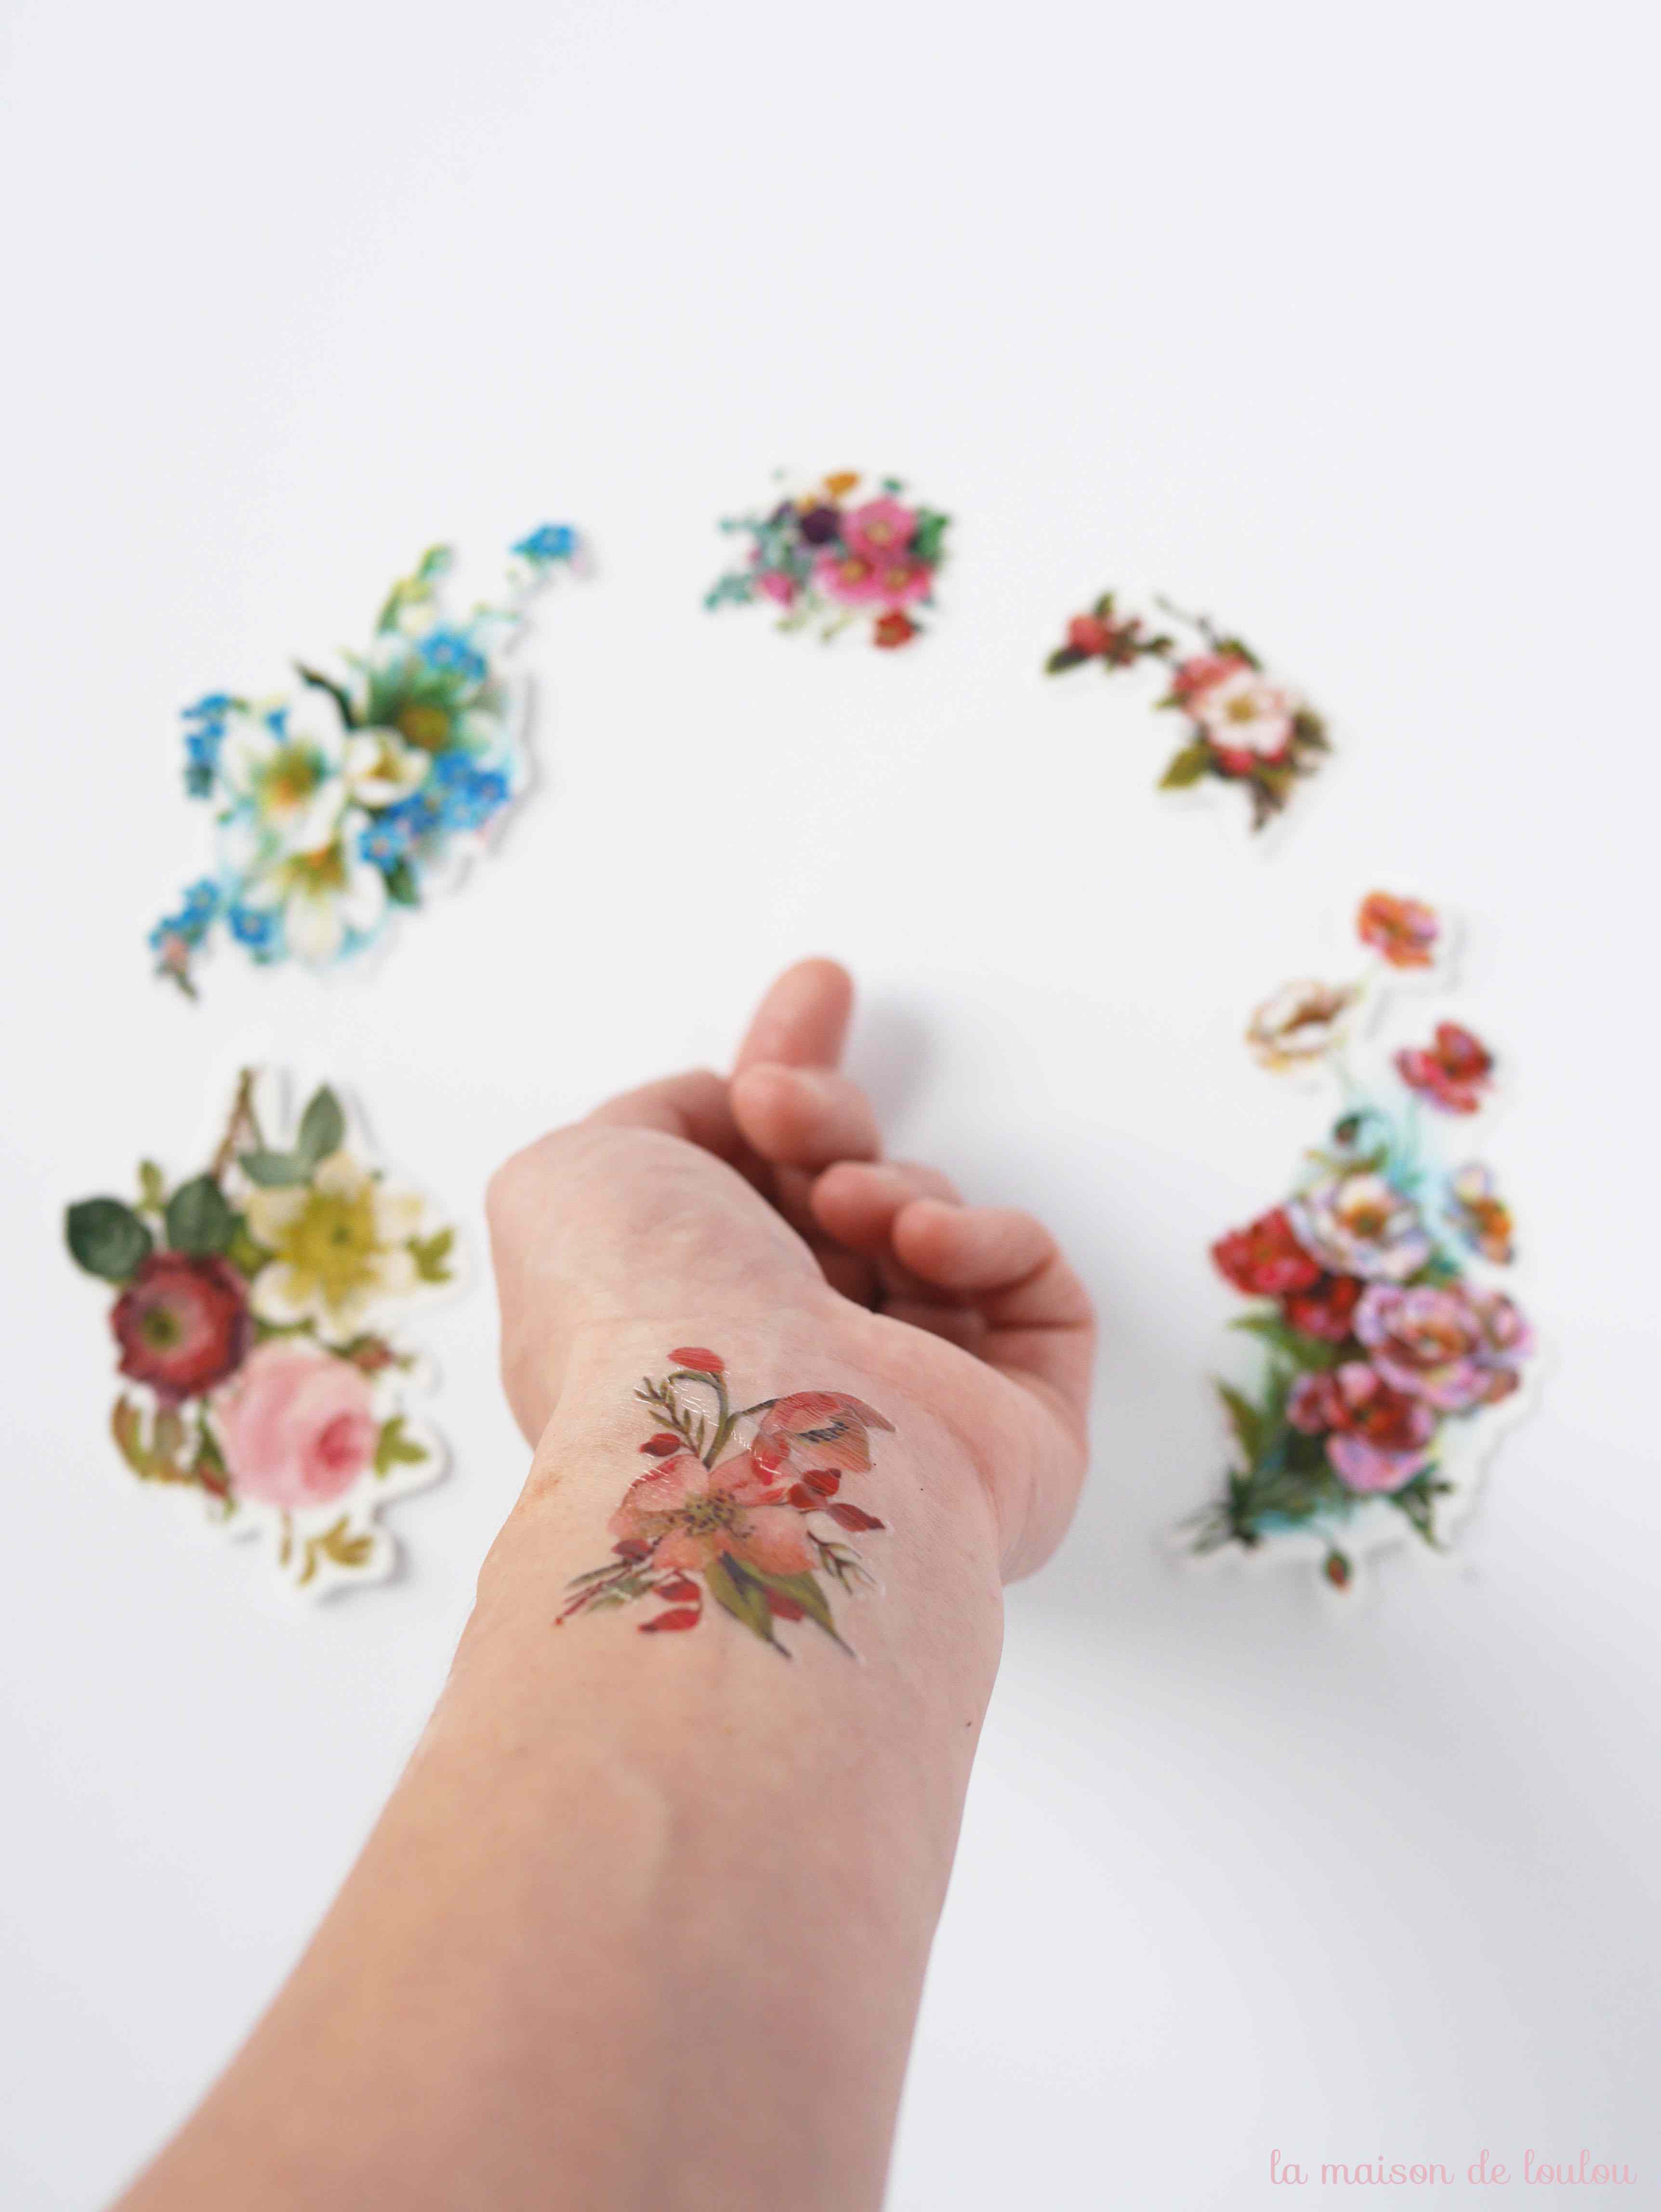 flower tattoos pics download